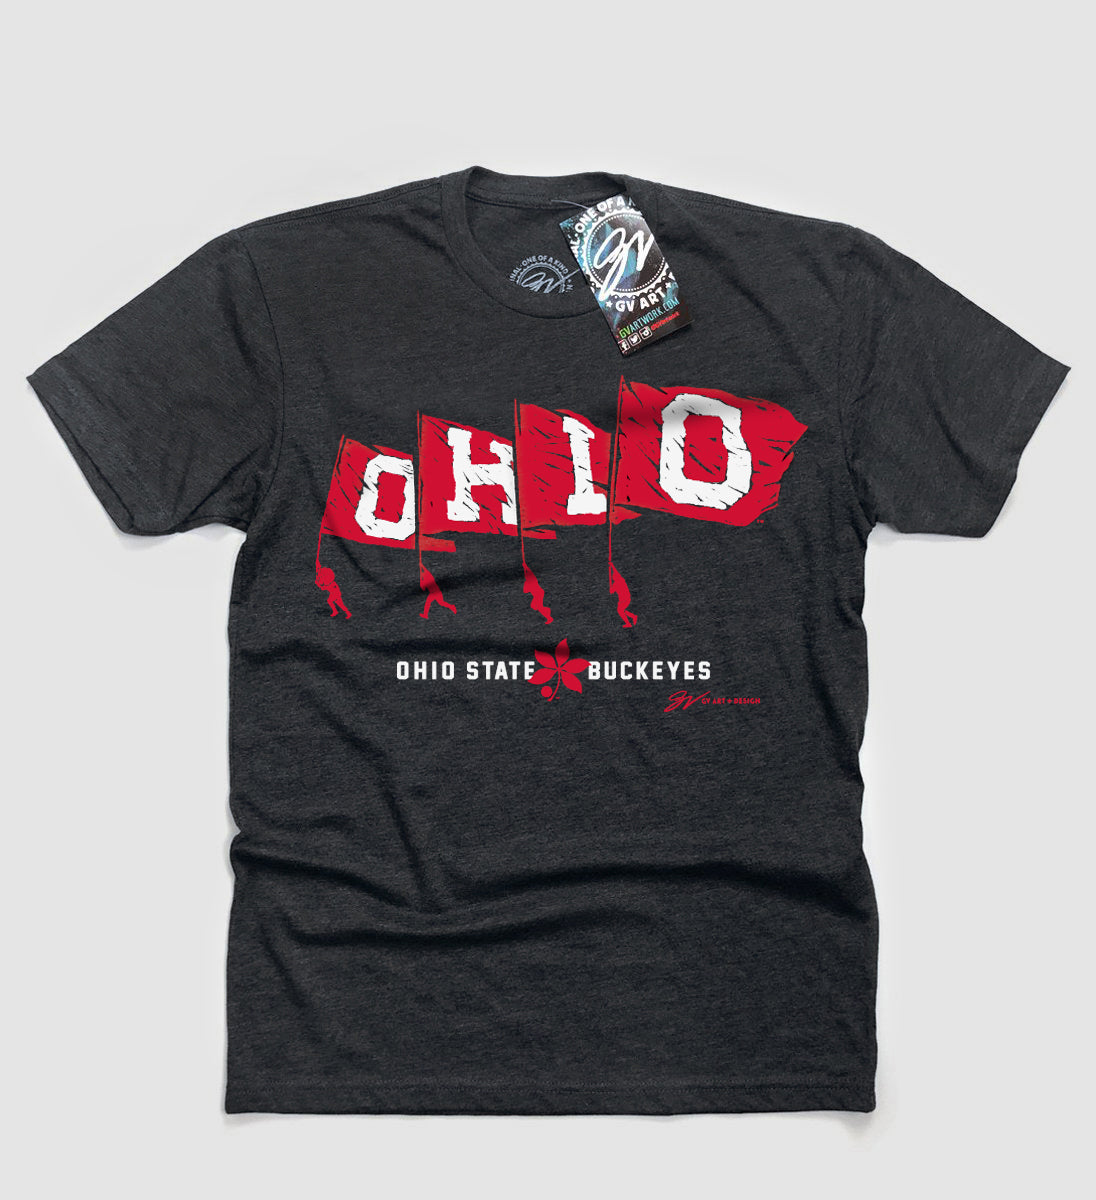 OH-IO Ohio State Buckeyes Flags T shirt